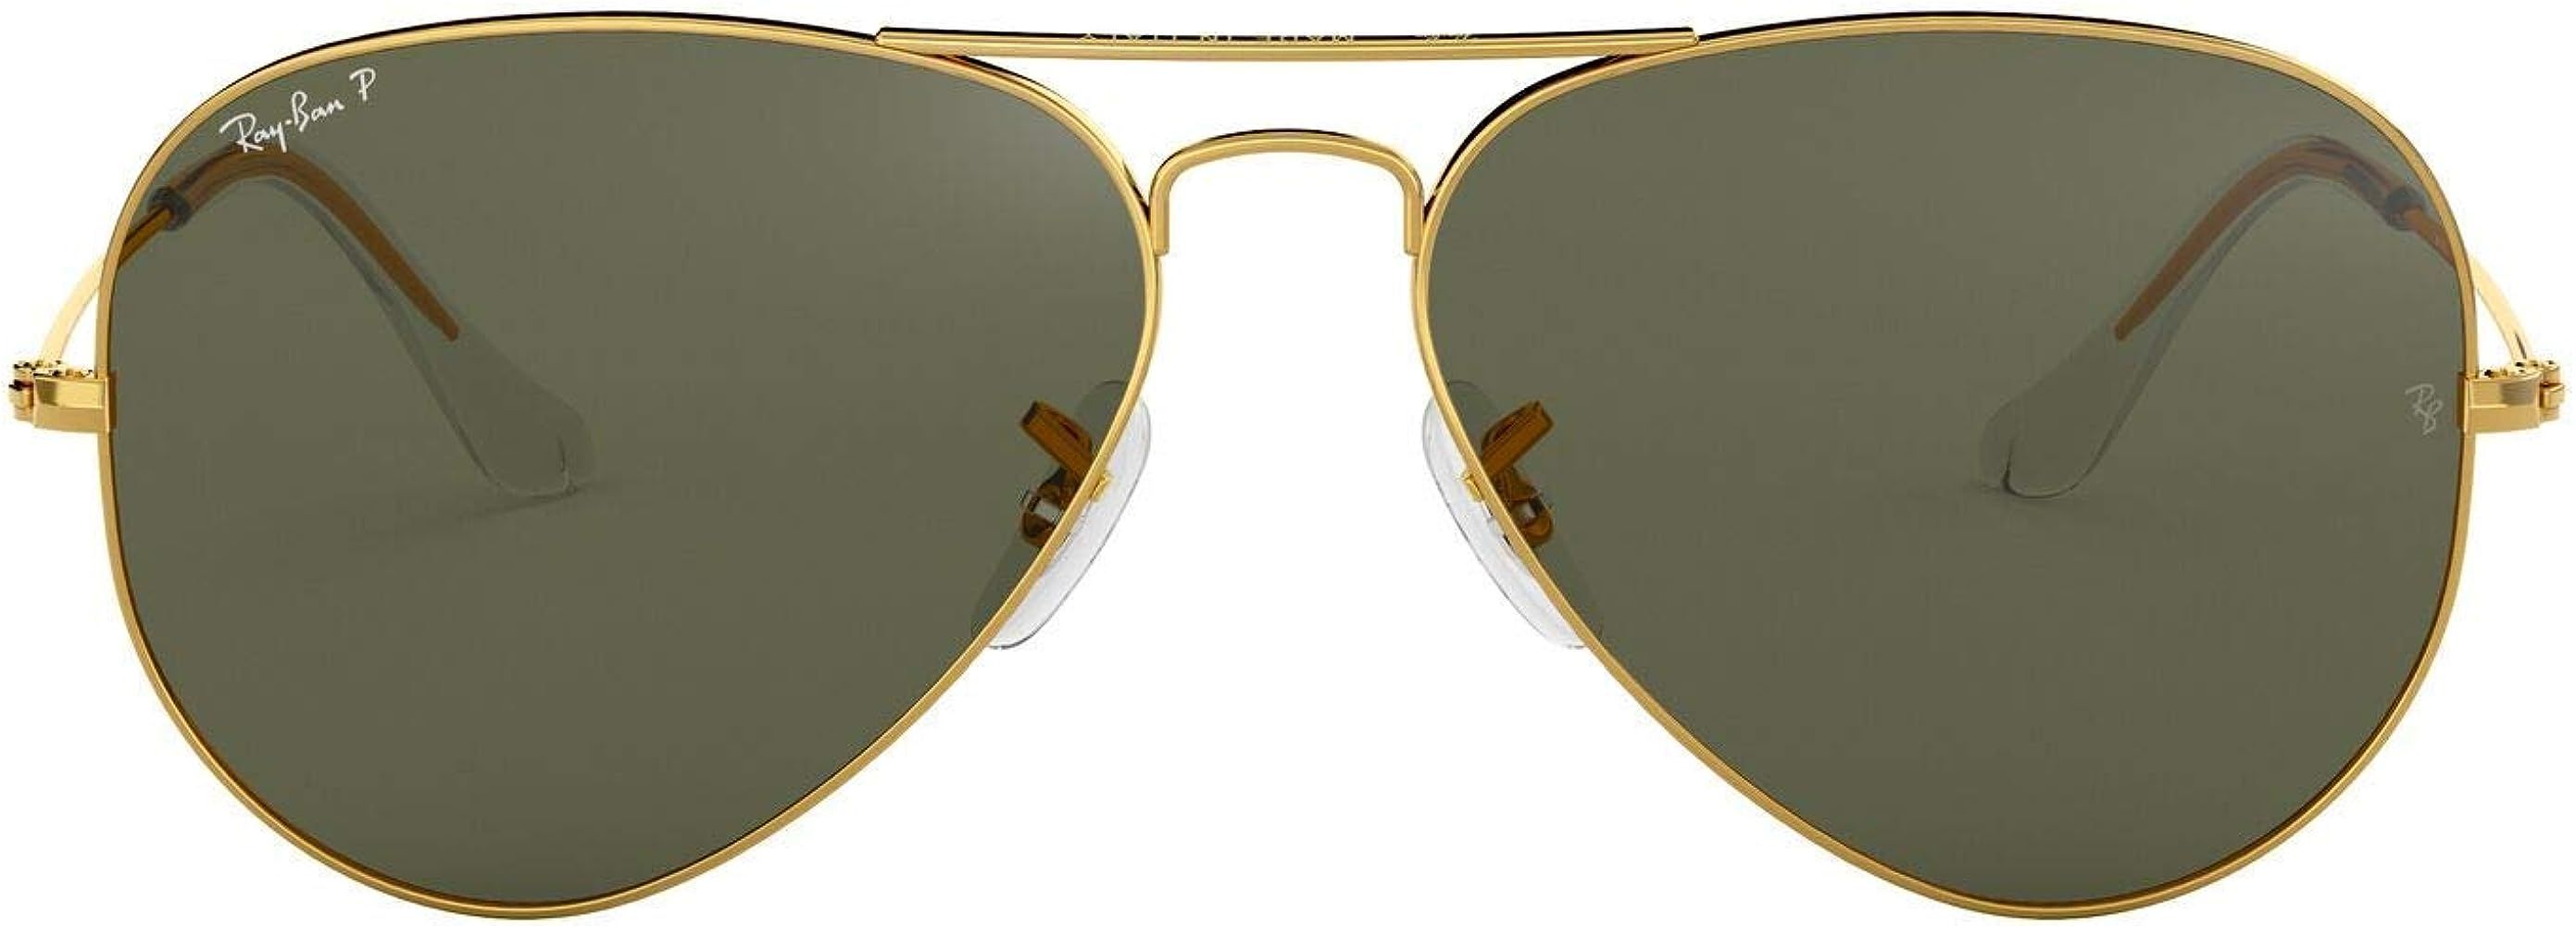 Ray-Ban Rb3025 Classic Mirrored Aviator Sunglasses | Amazon (US)